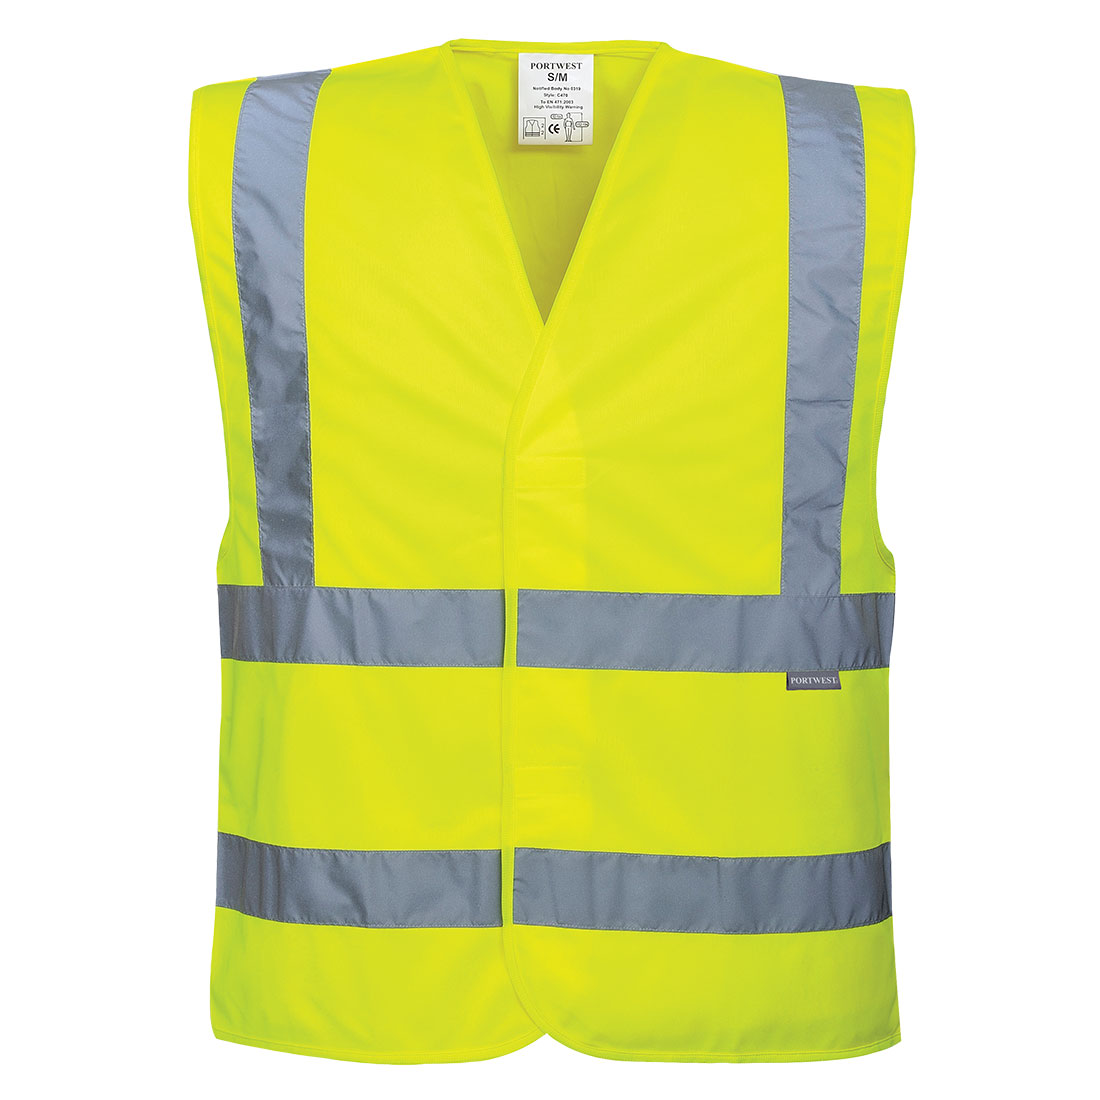 Hi-Vis Band and Brace Vest, Yellow     Size XX3X R/Fit